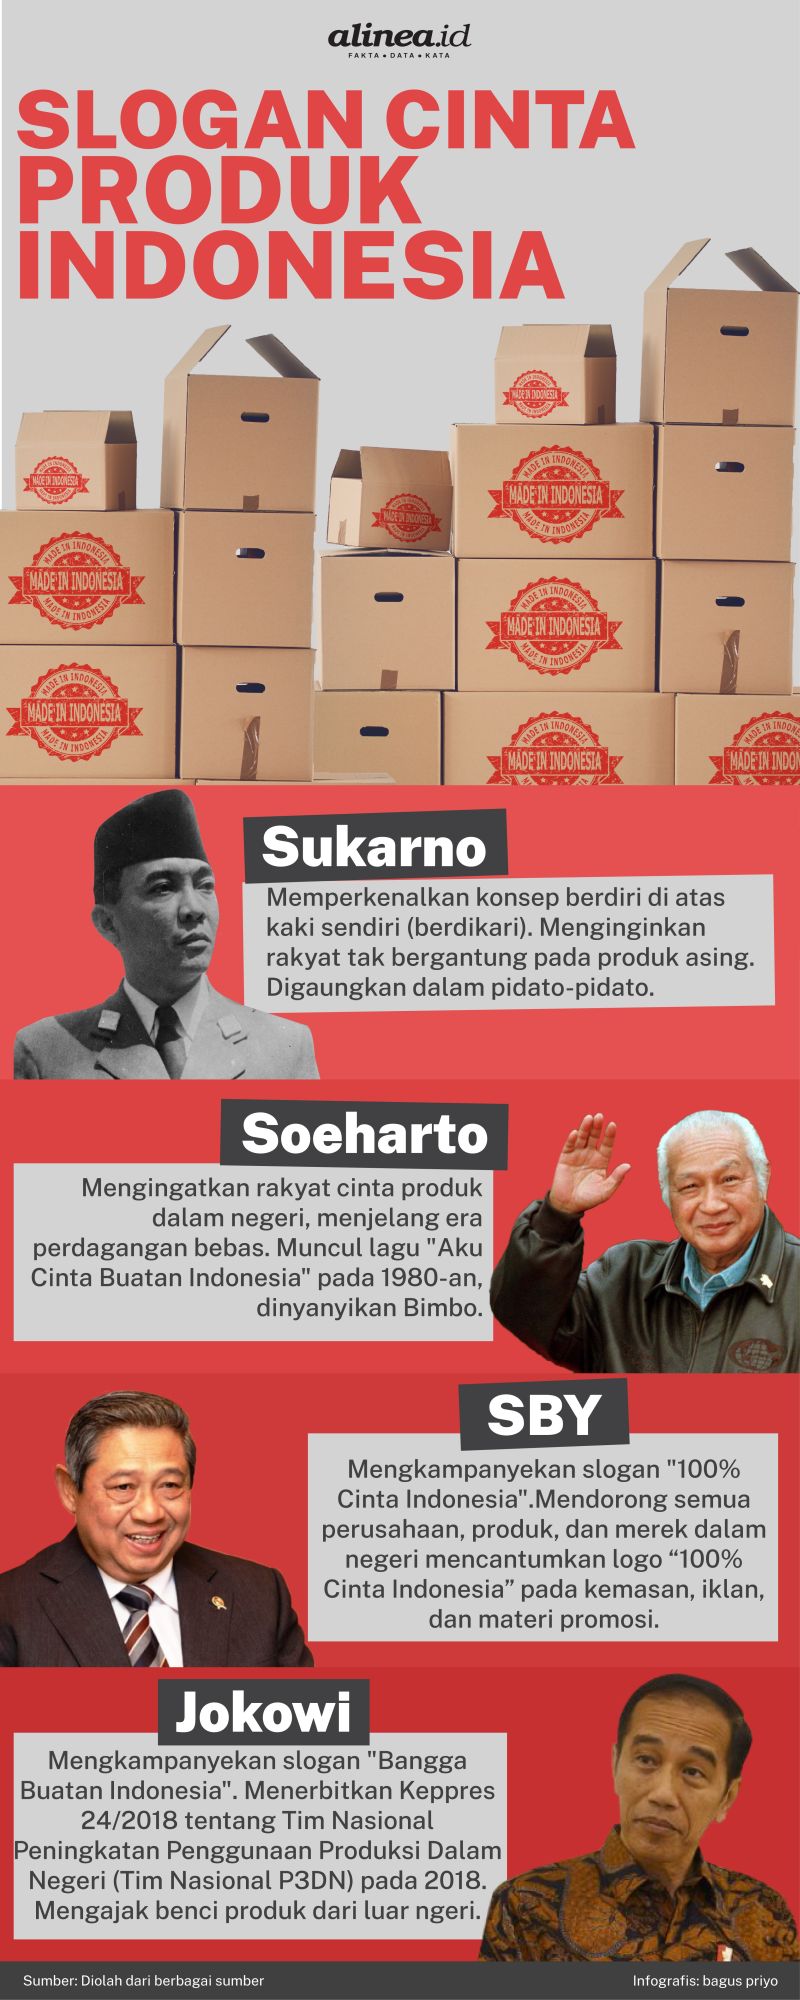 Infografik cinta produk Indonesia. Alinea.id/Bagus Priyo.